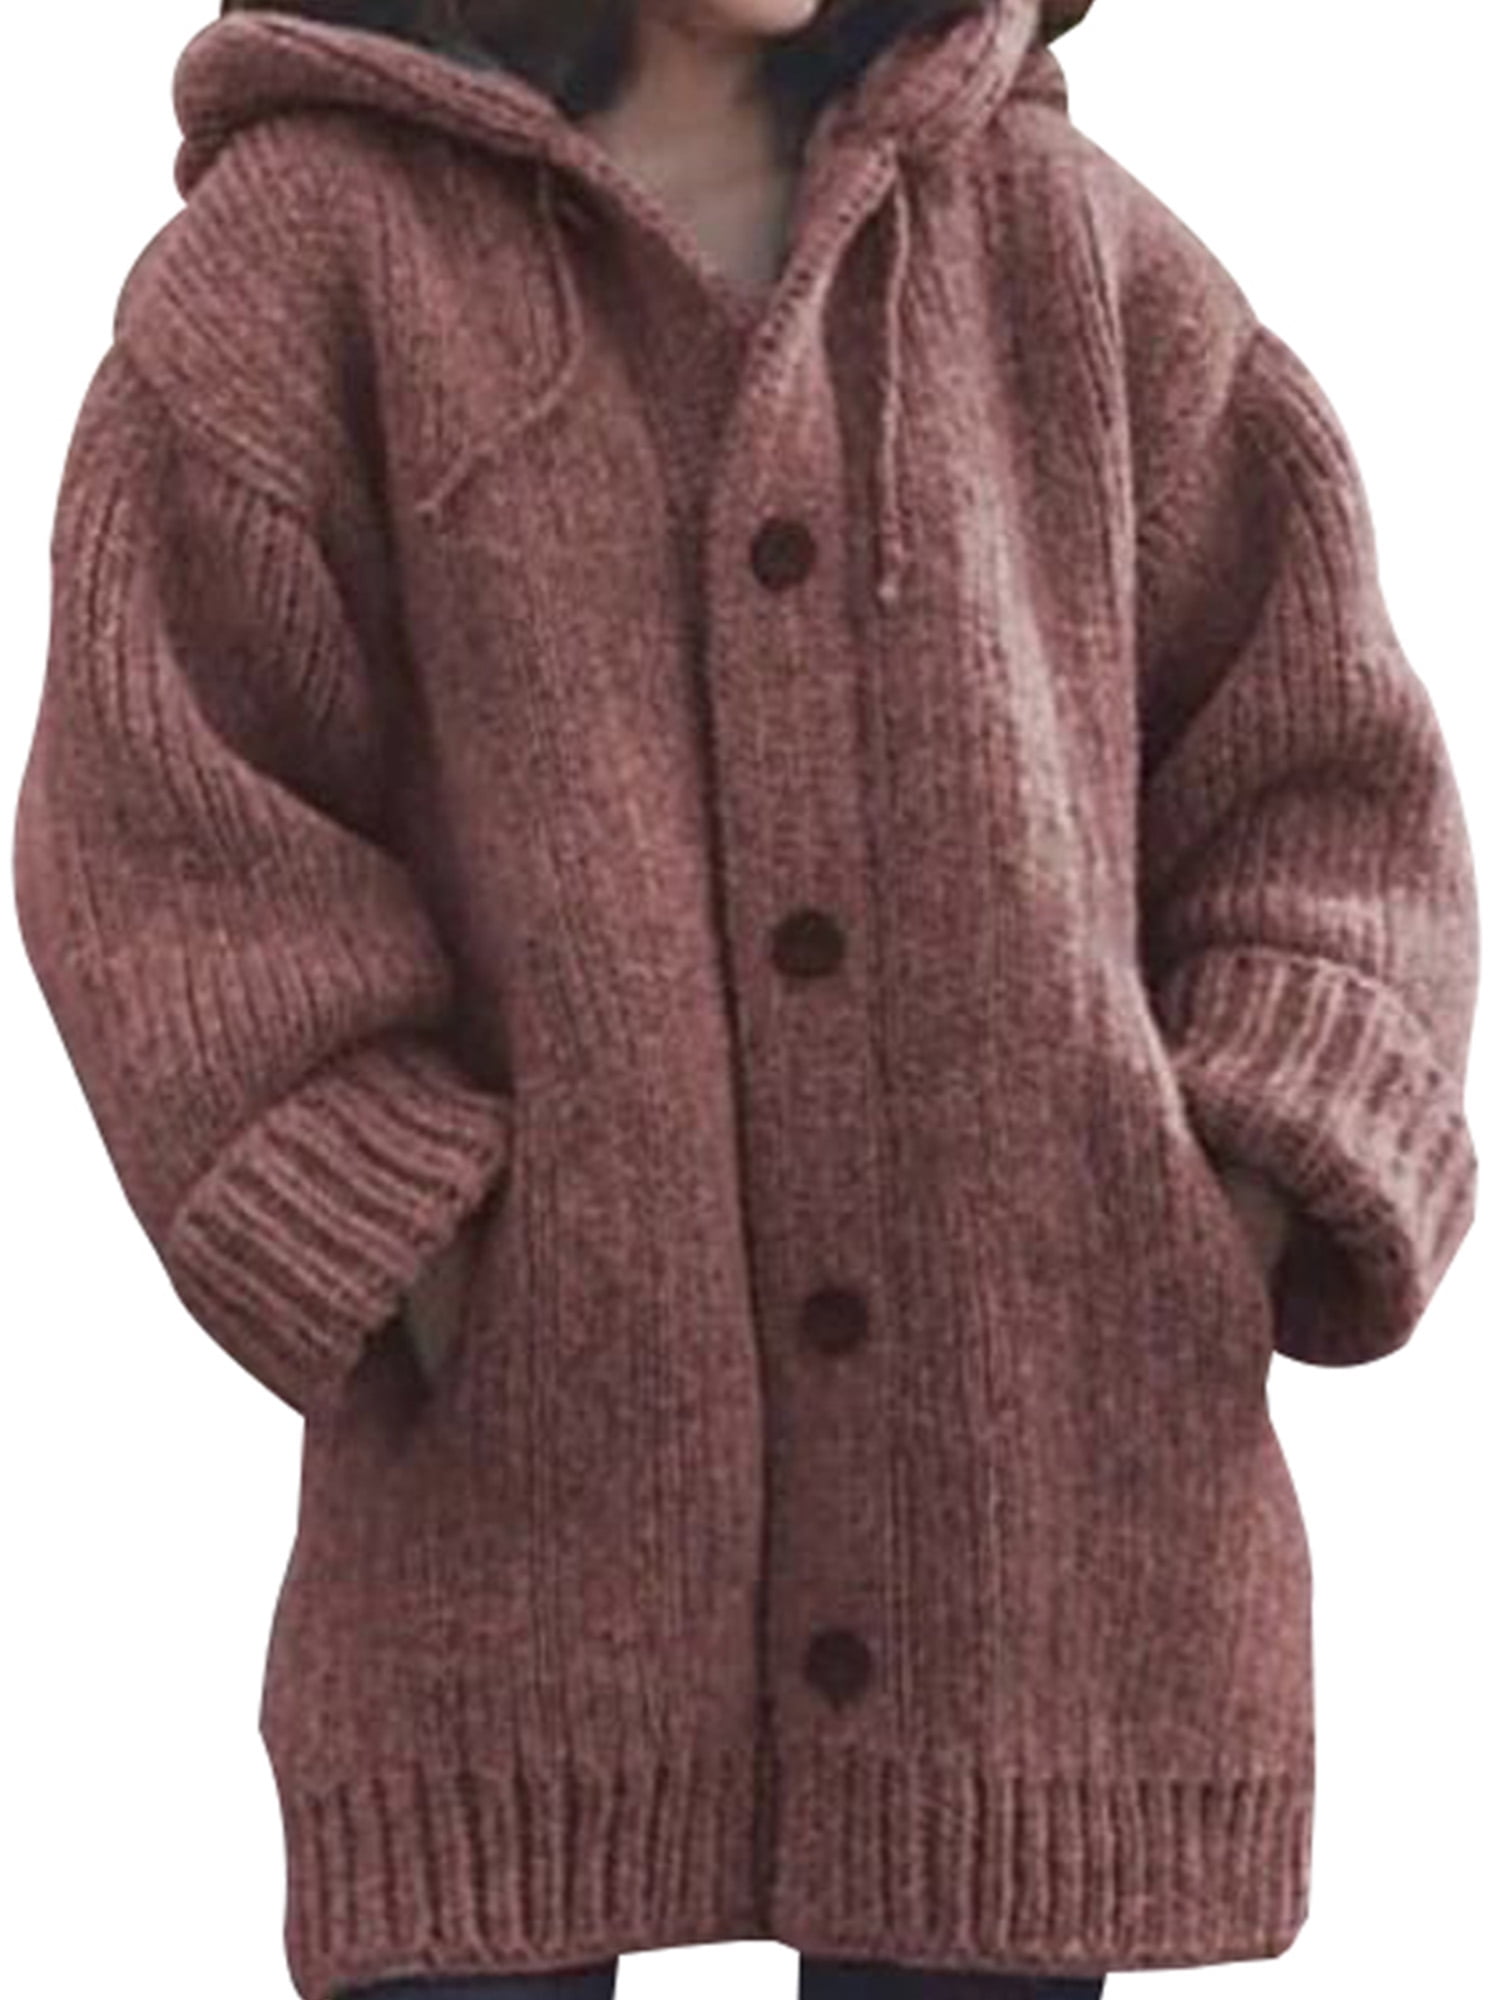 KLJR Men Outerwear Plus Size Cardigan Thick Coat Fleece Lined Winter Sweatshirt